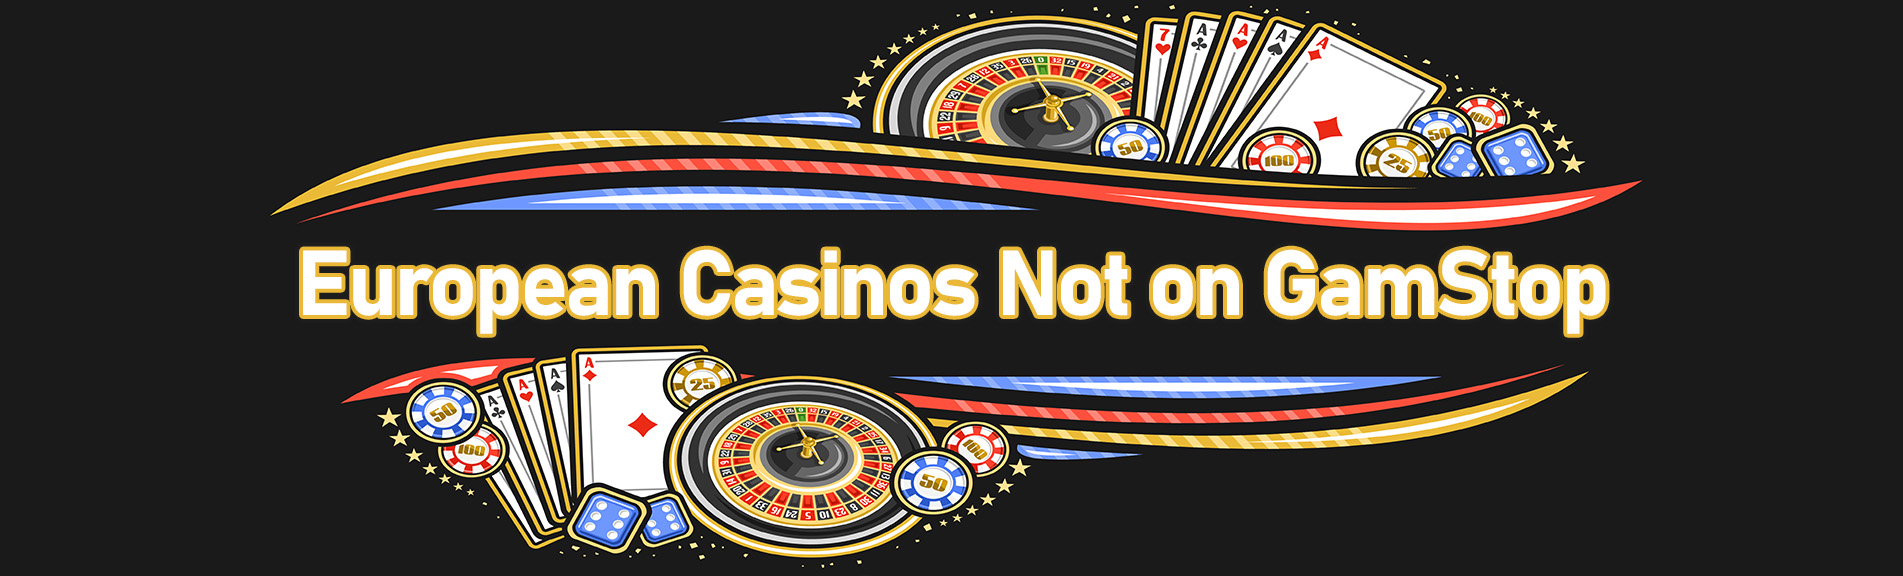 European Casinos Not on GamStop